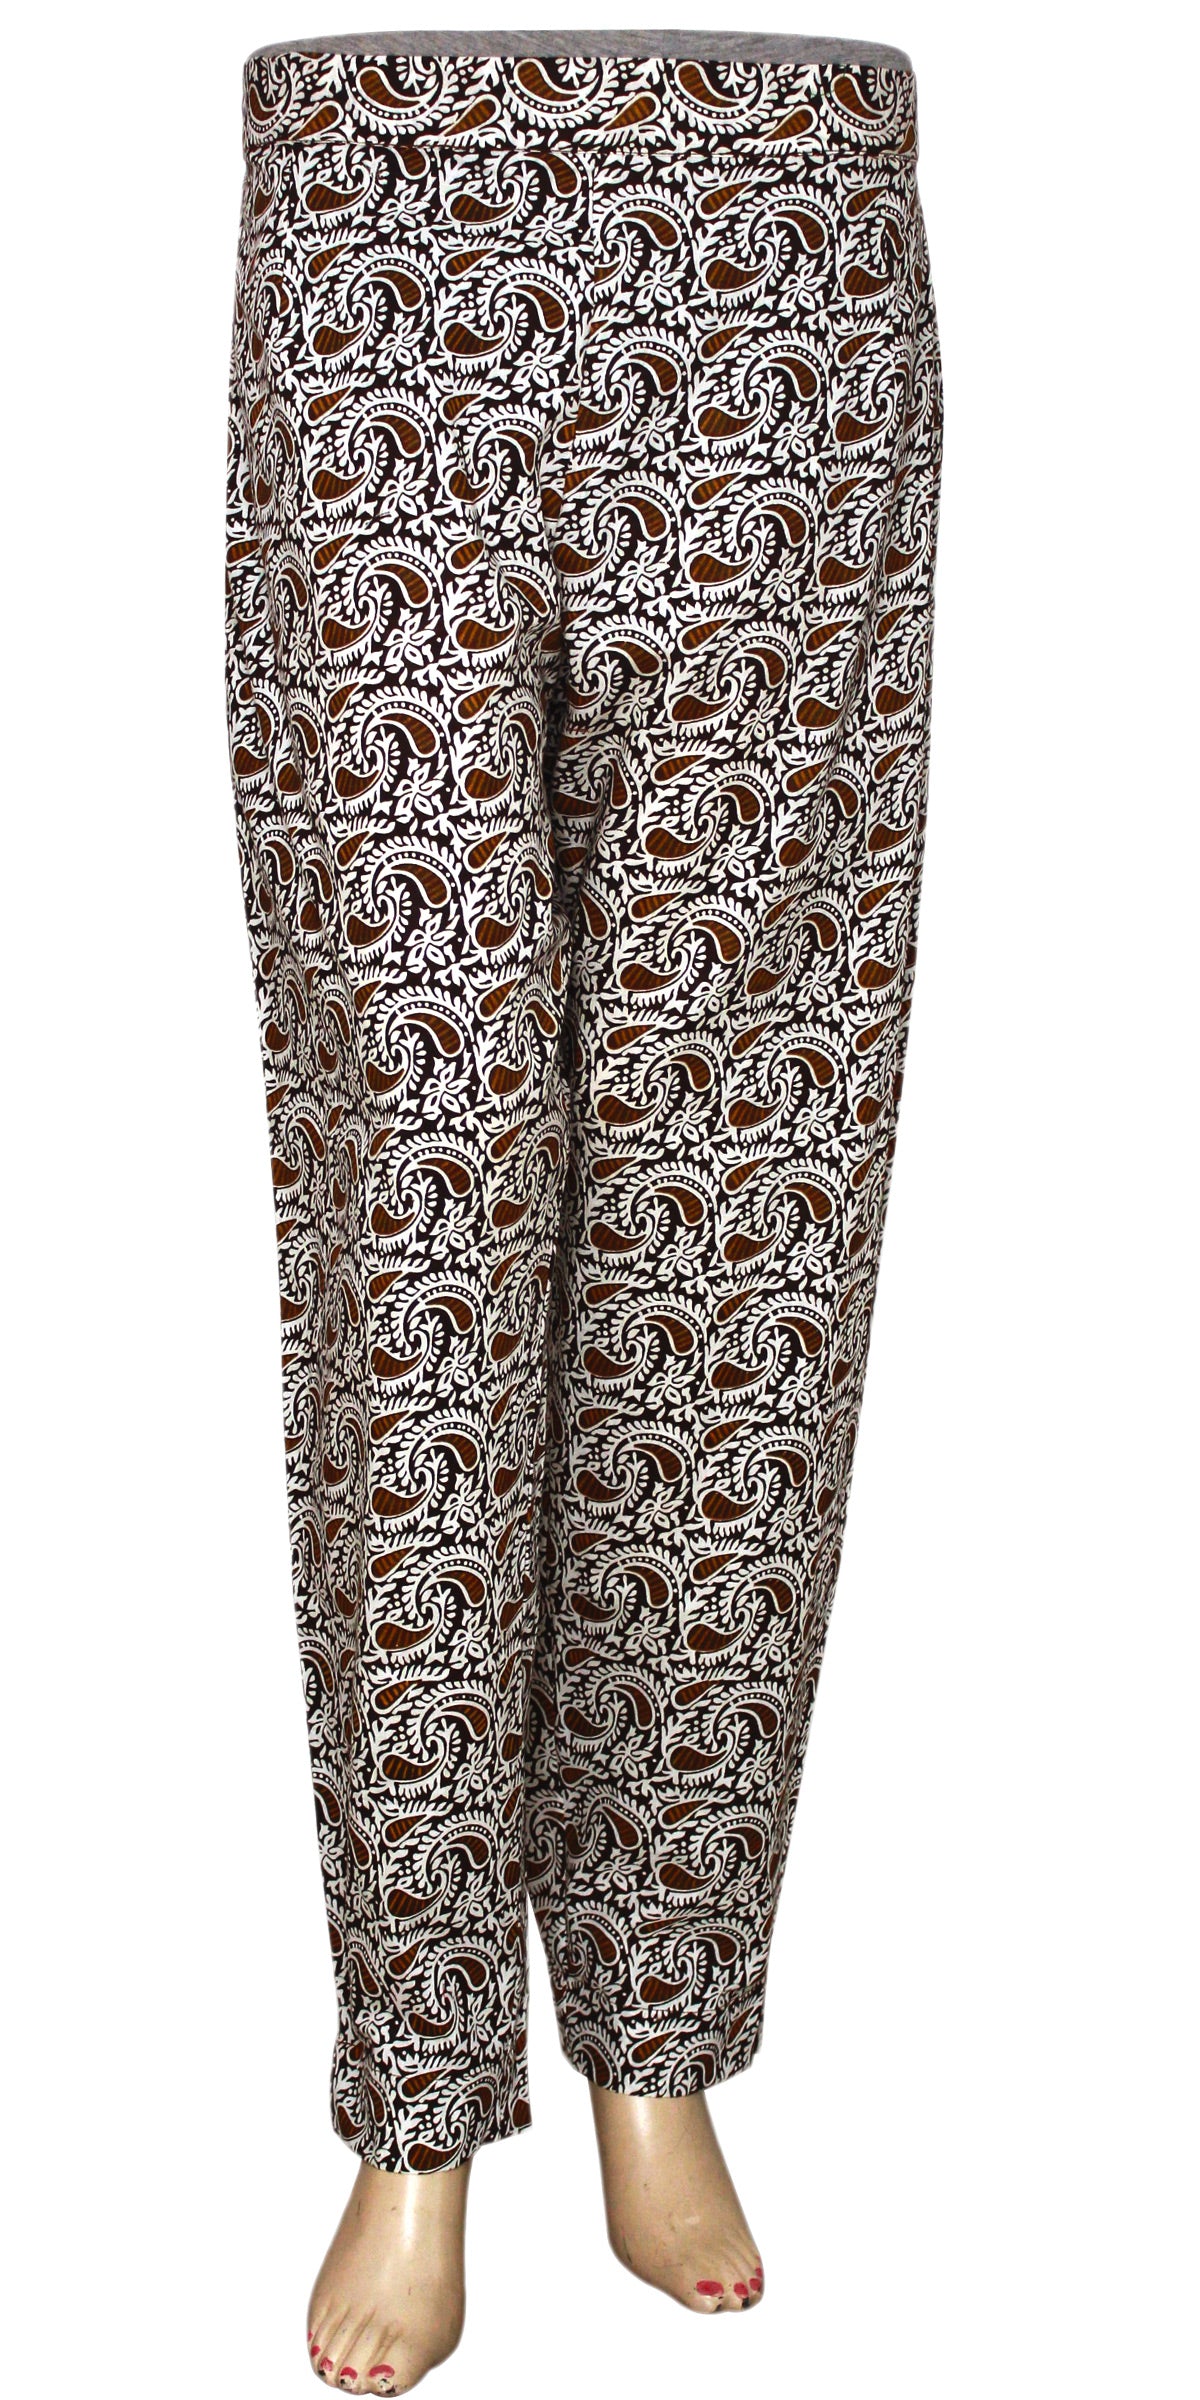 Brown & white Paisley Batik Print Cotton Women's Fitted Skinny Pants Trousers